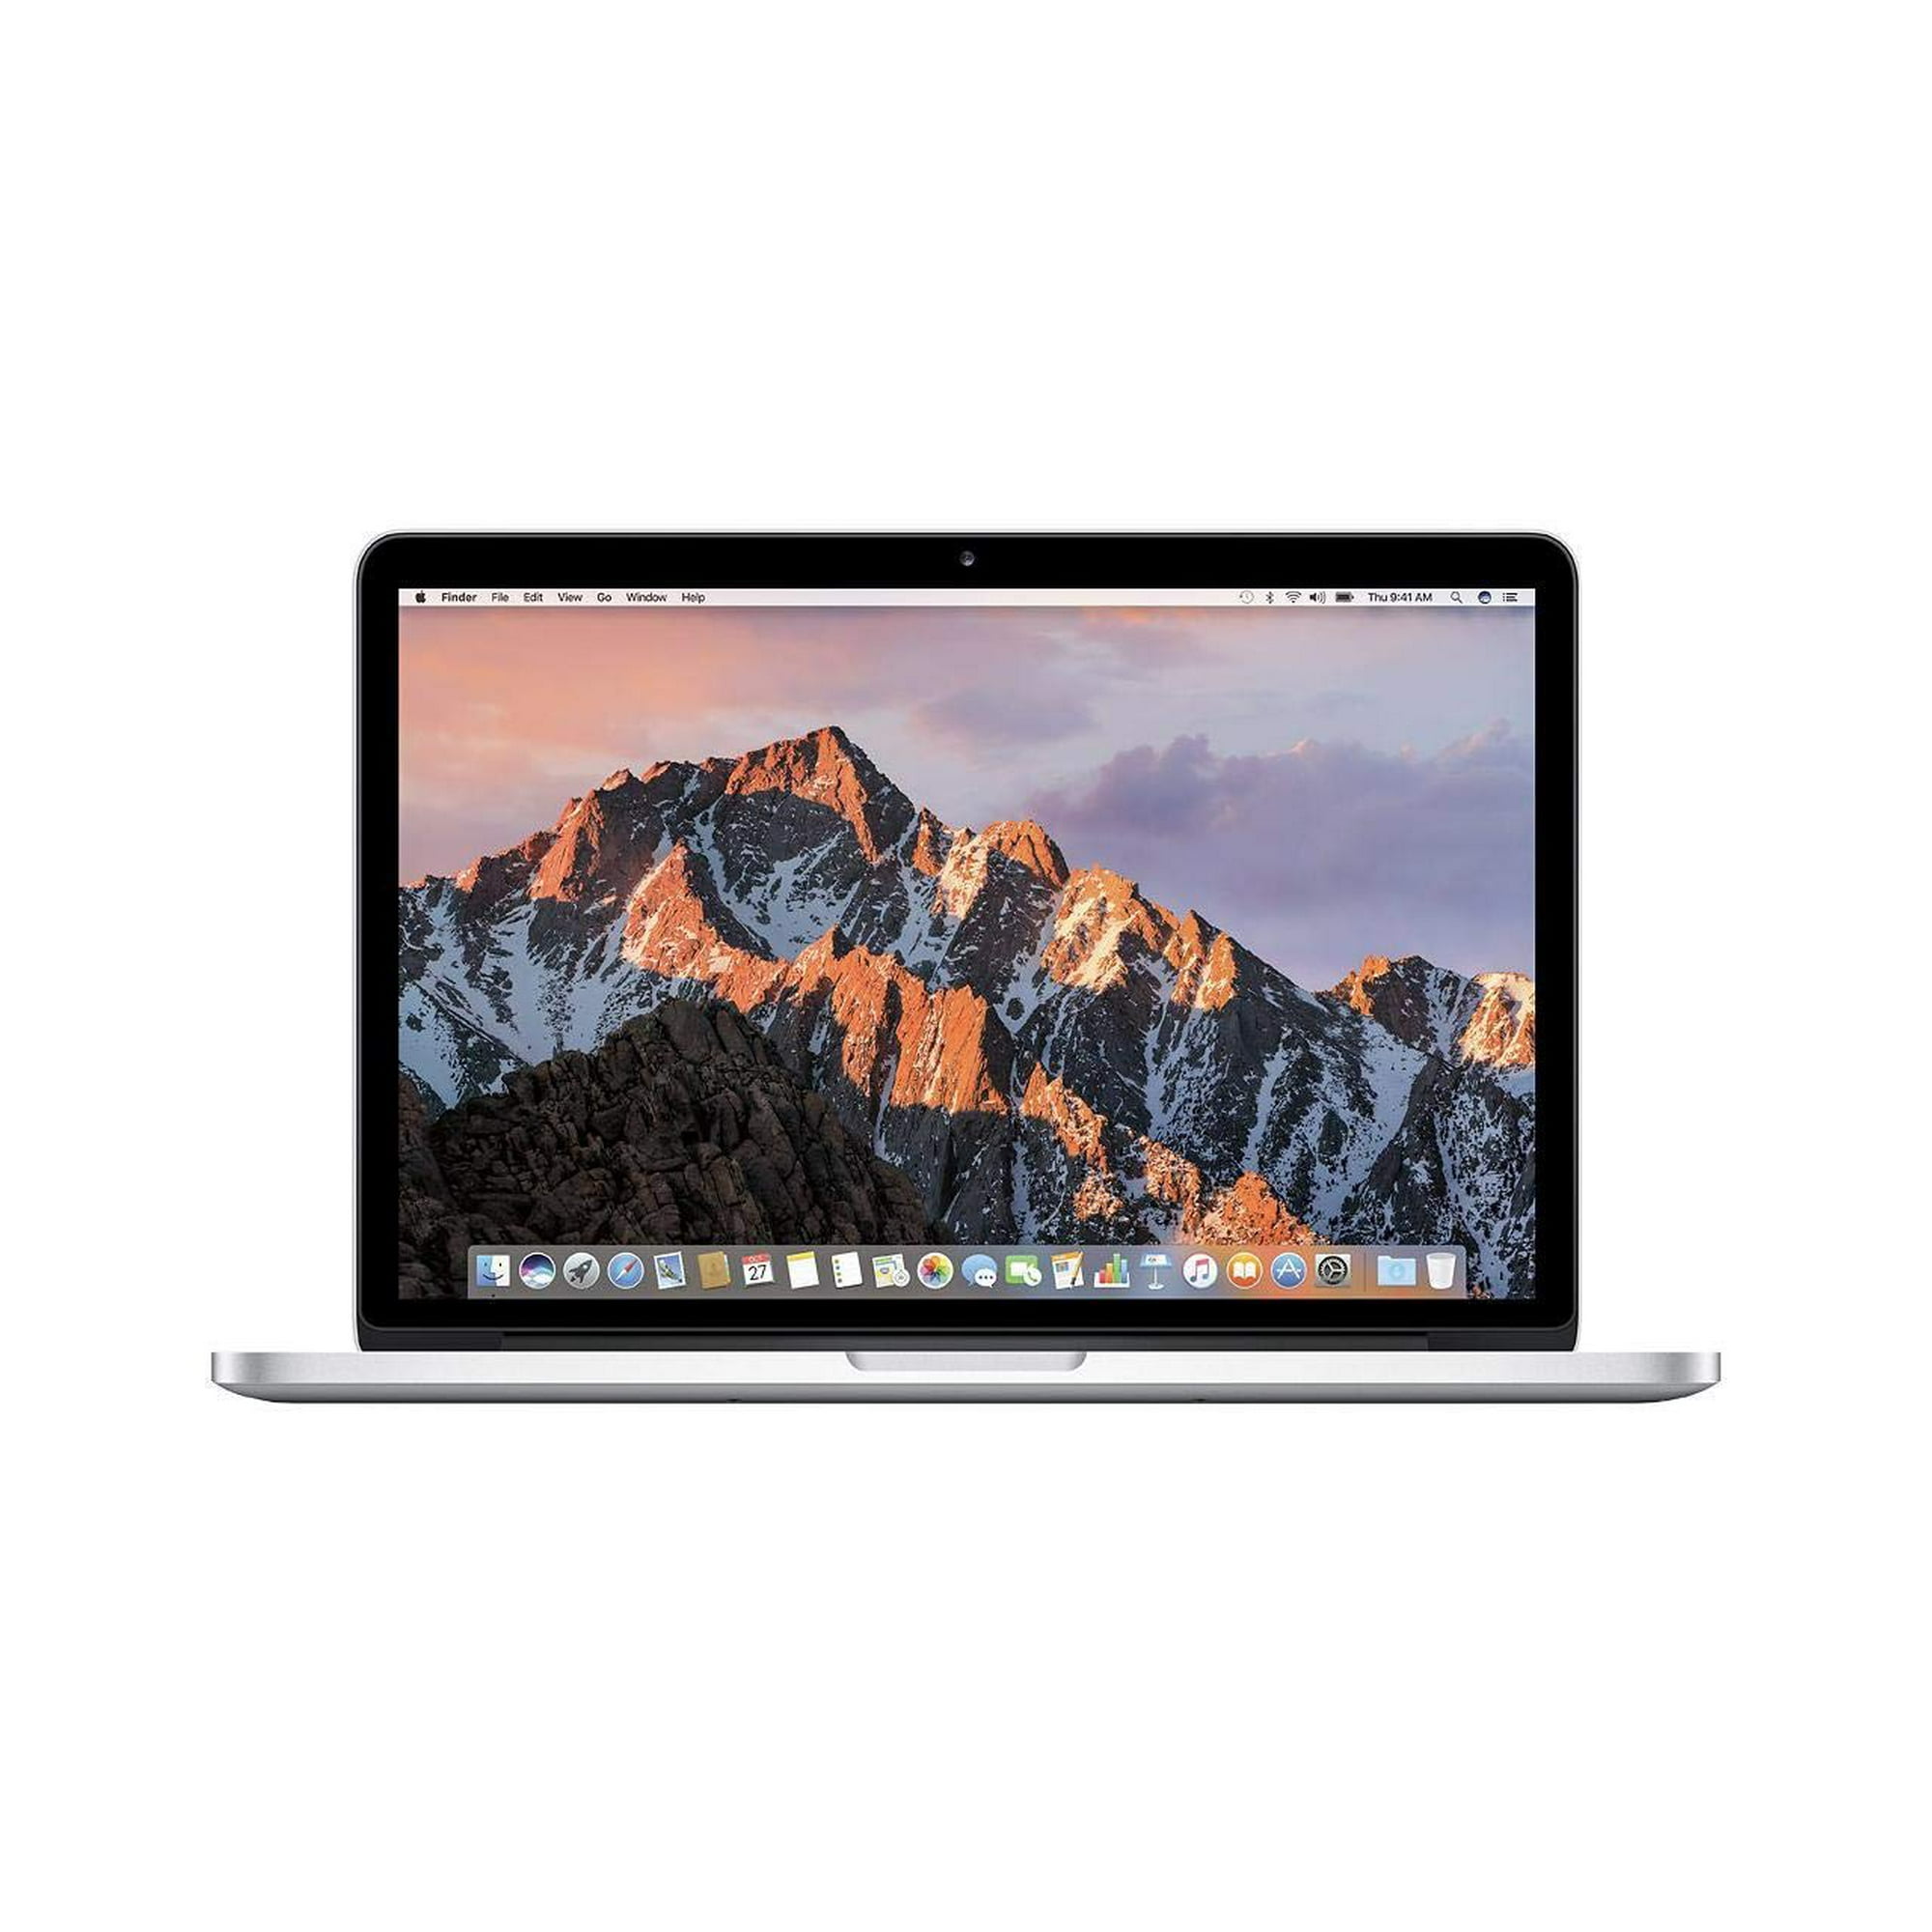 Apple MacBook Pro MJLQ2LL/A, 15.4-inch Laptop, Intel Core i7